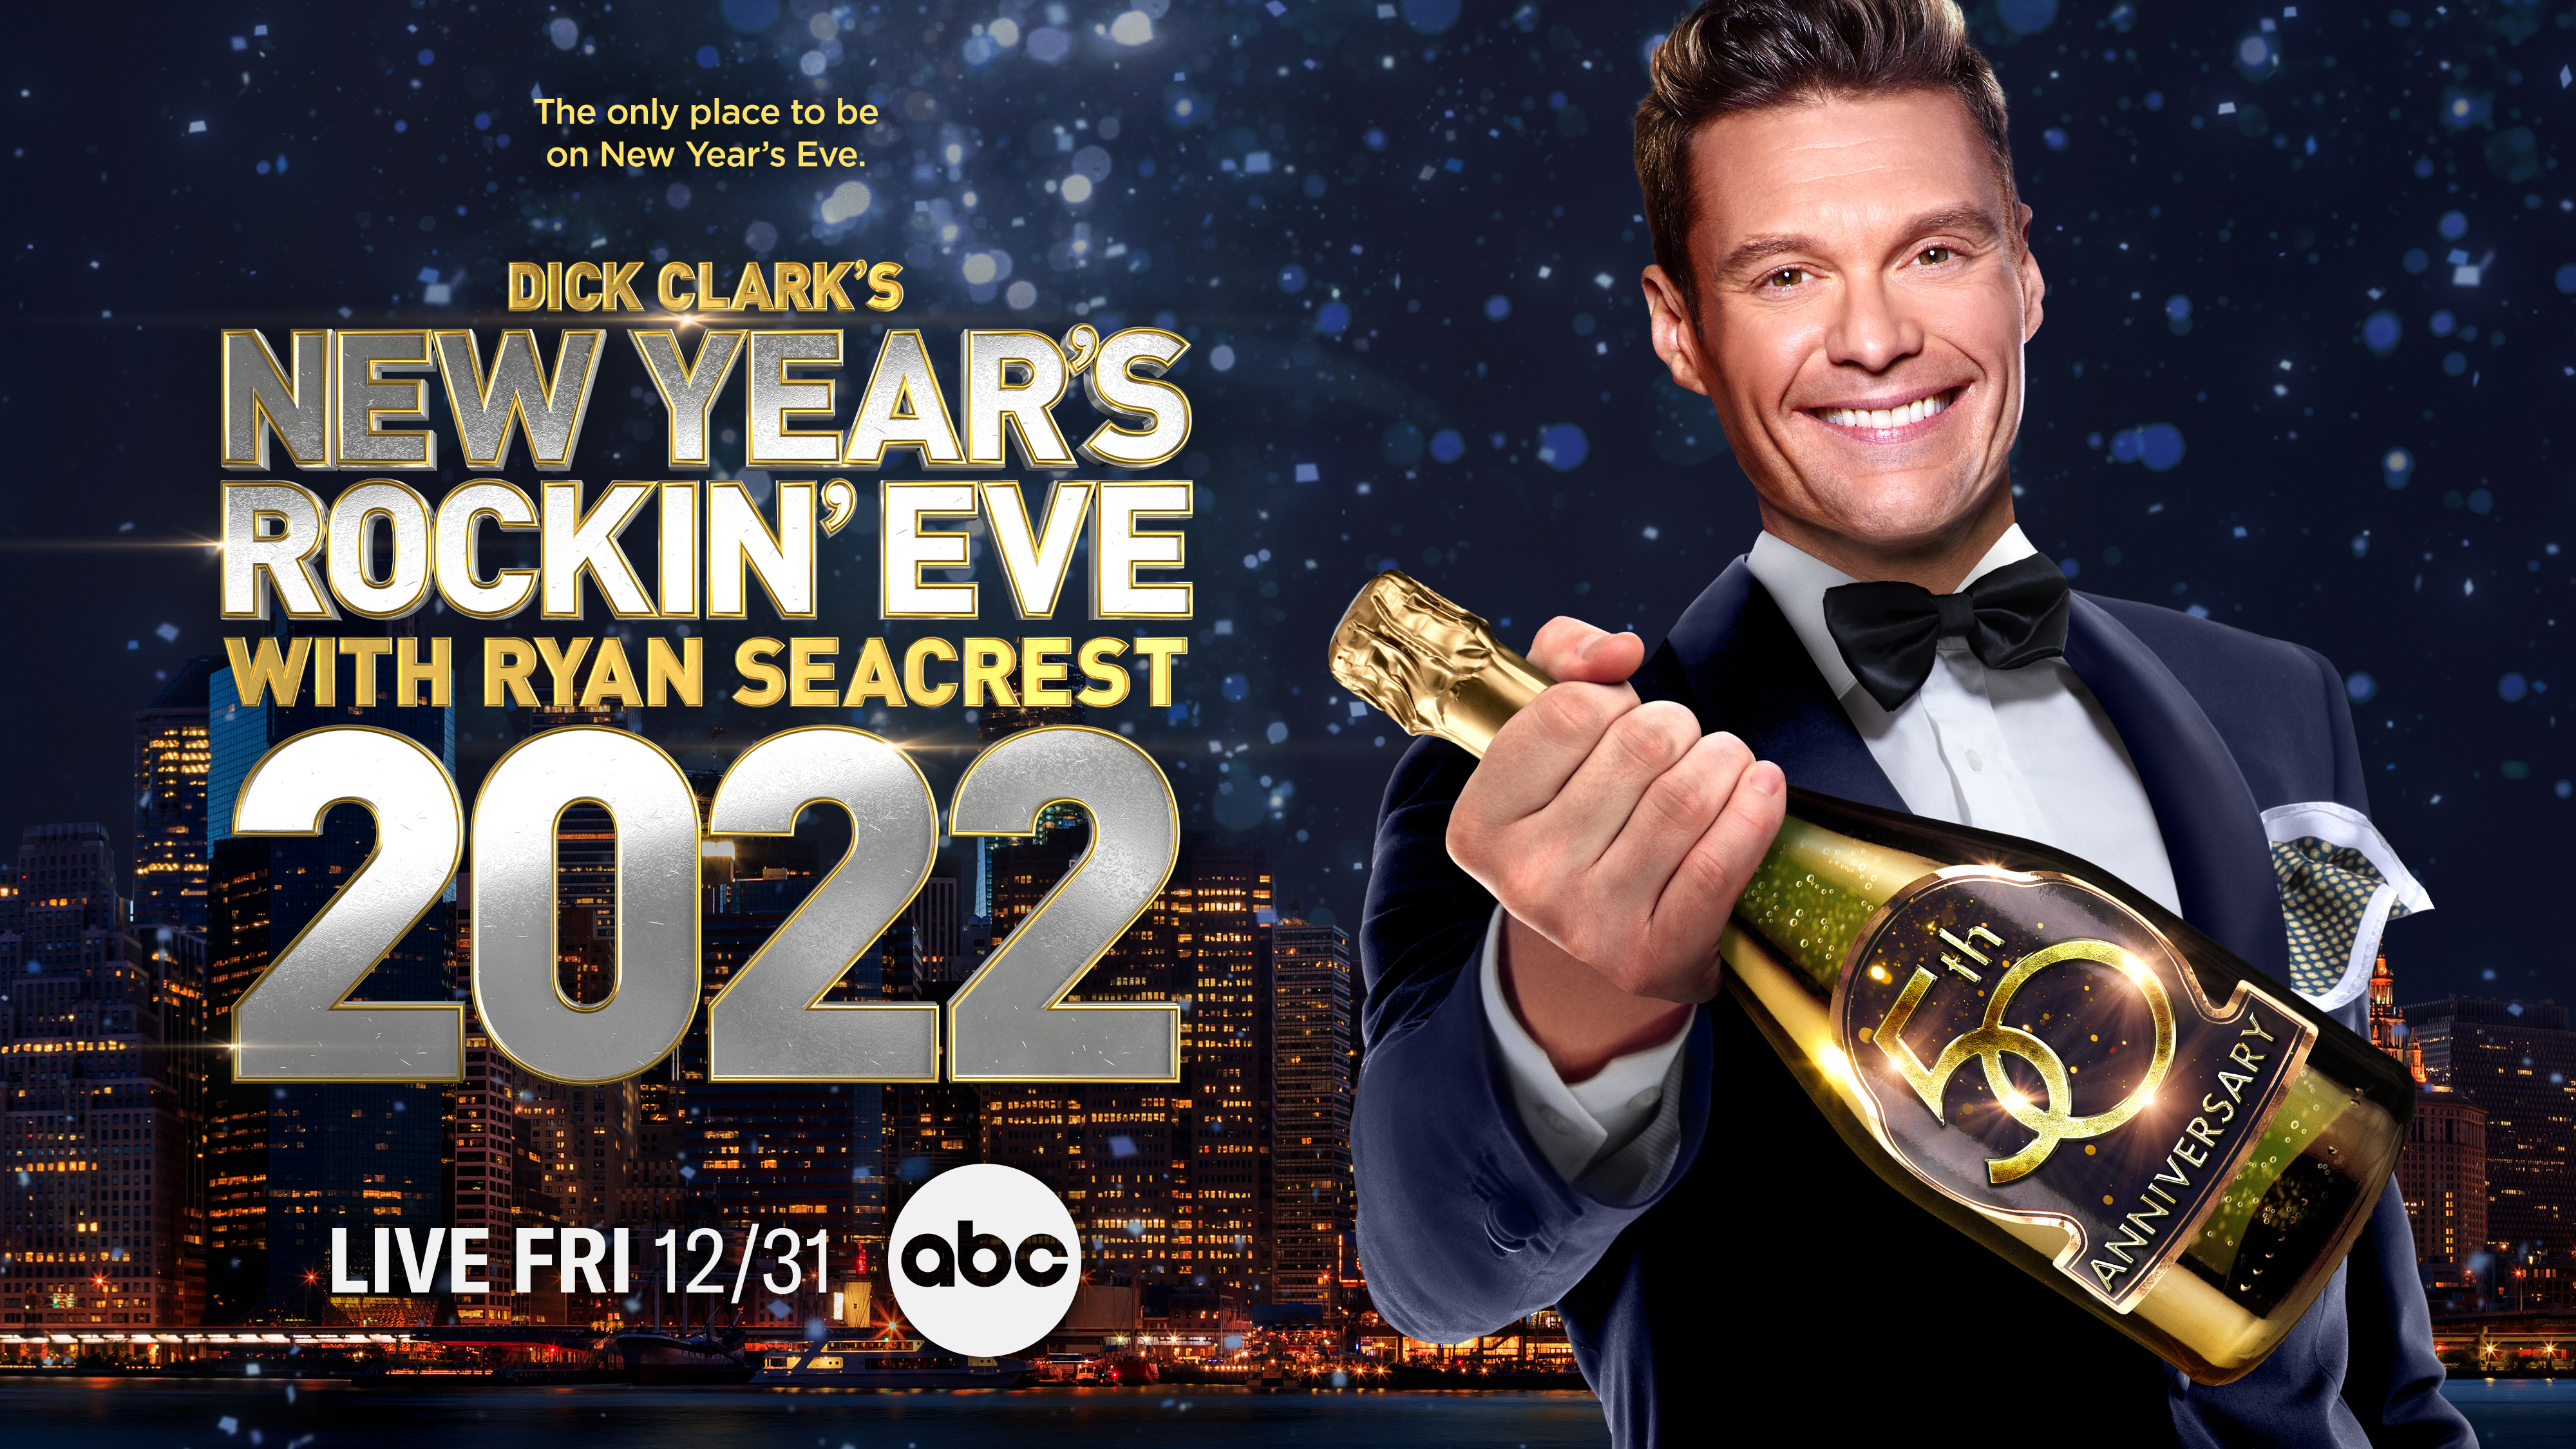 Dick clark new years eve 2015 lineup